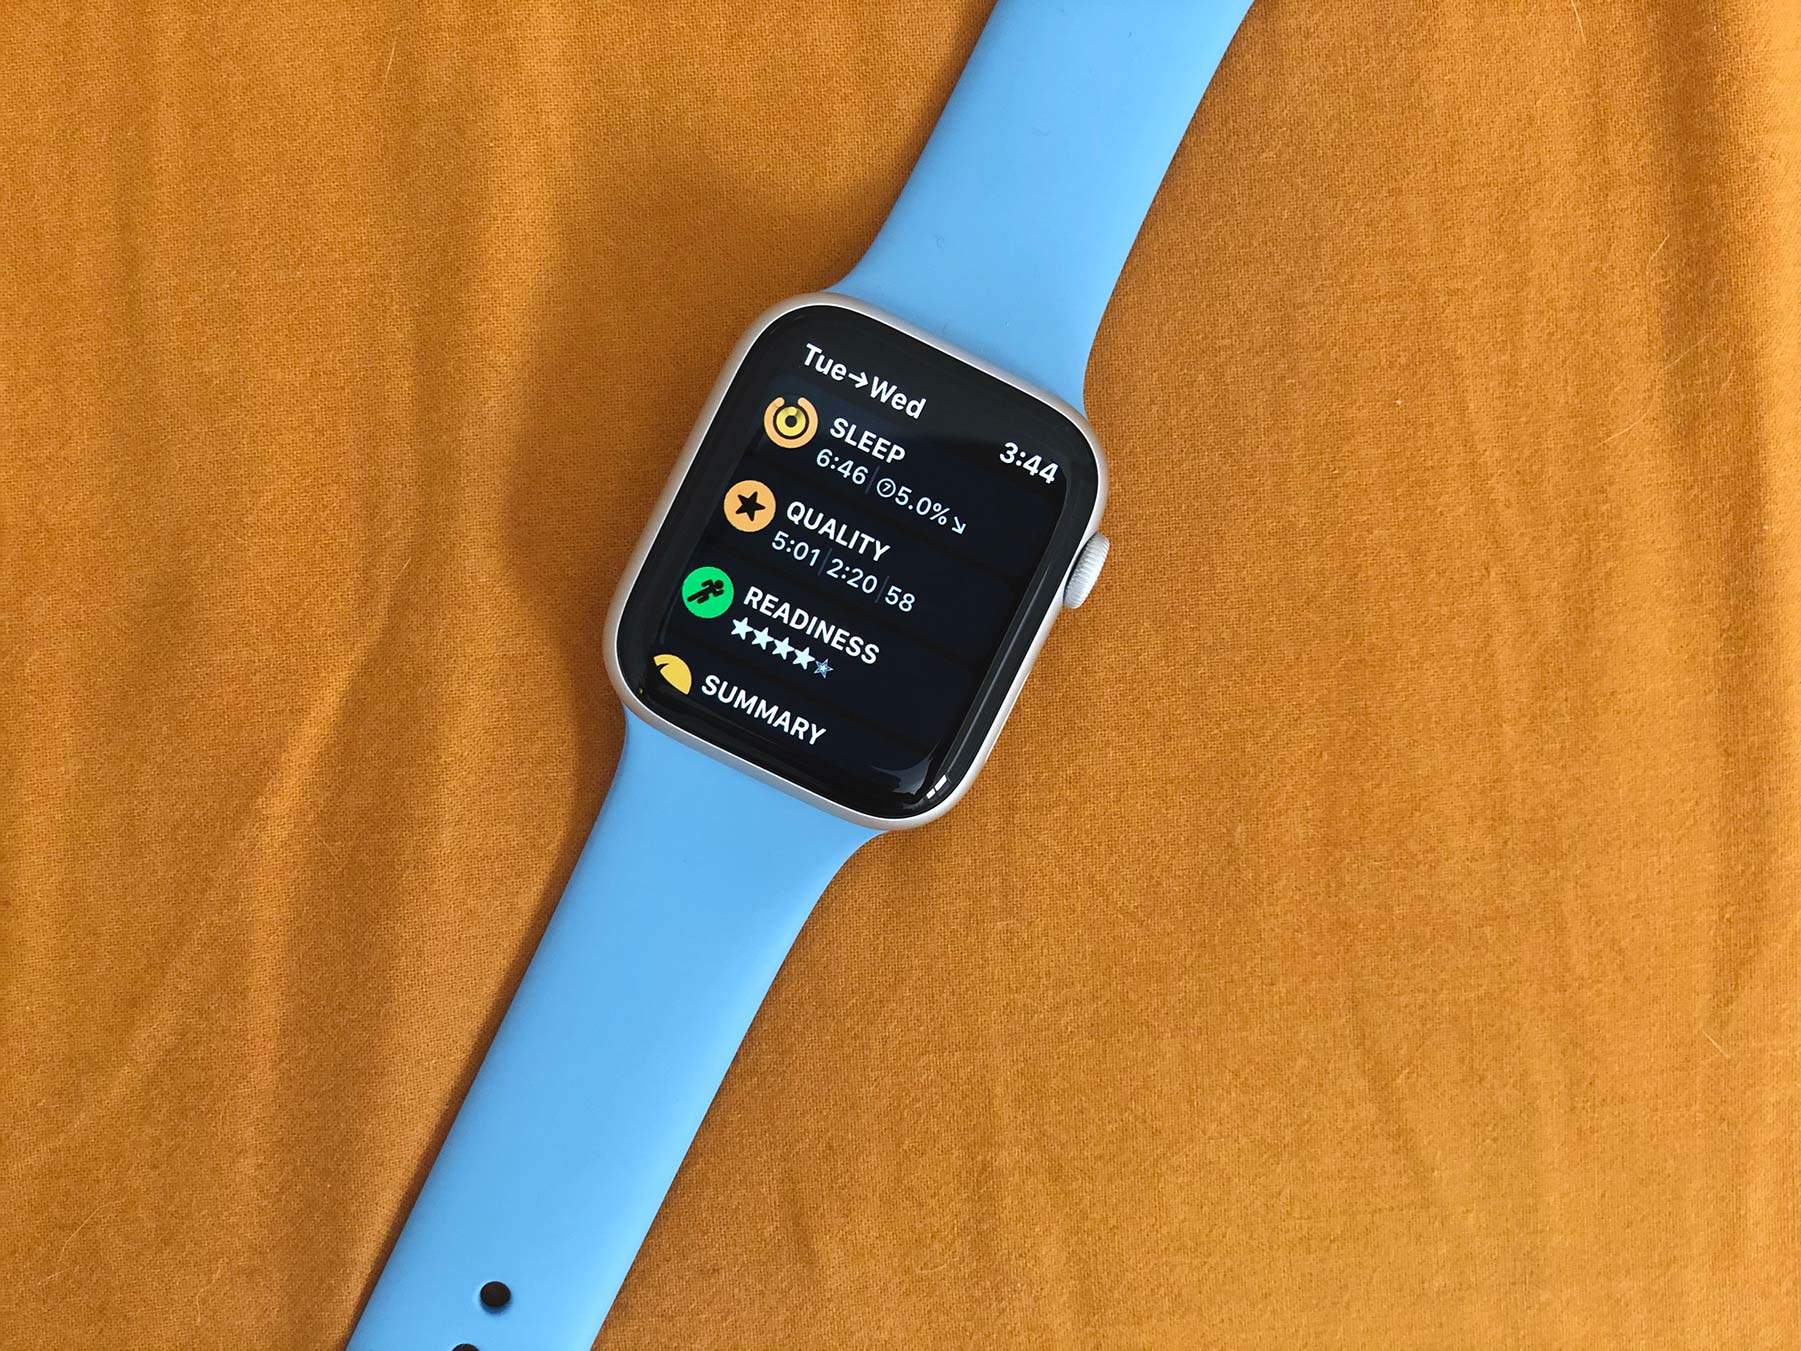 AutoSleep Sleep Tracking App on Apple Watch Series 4